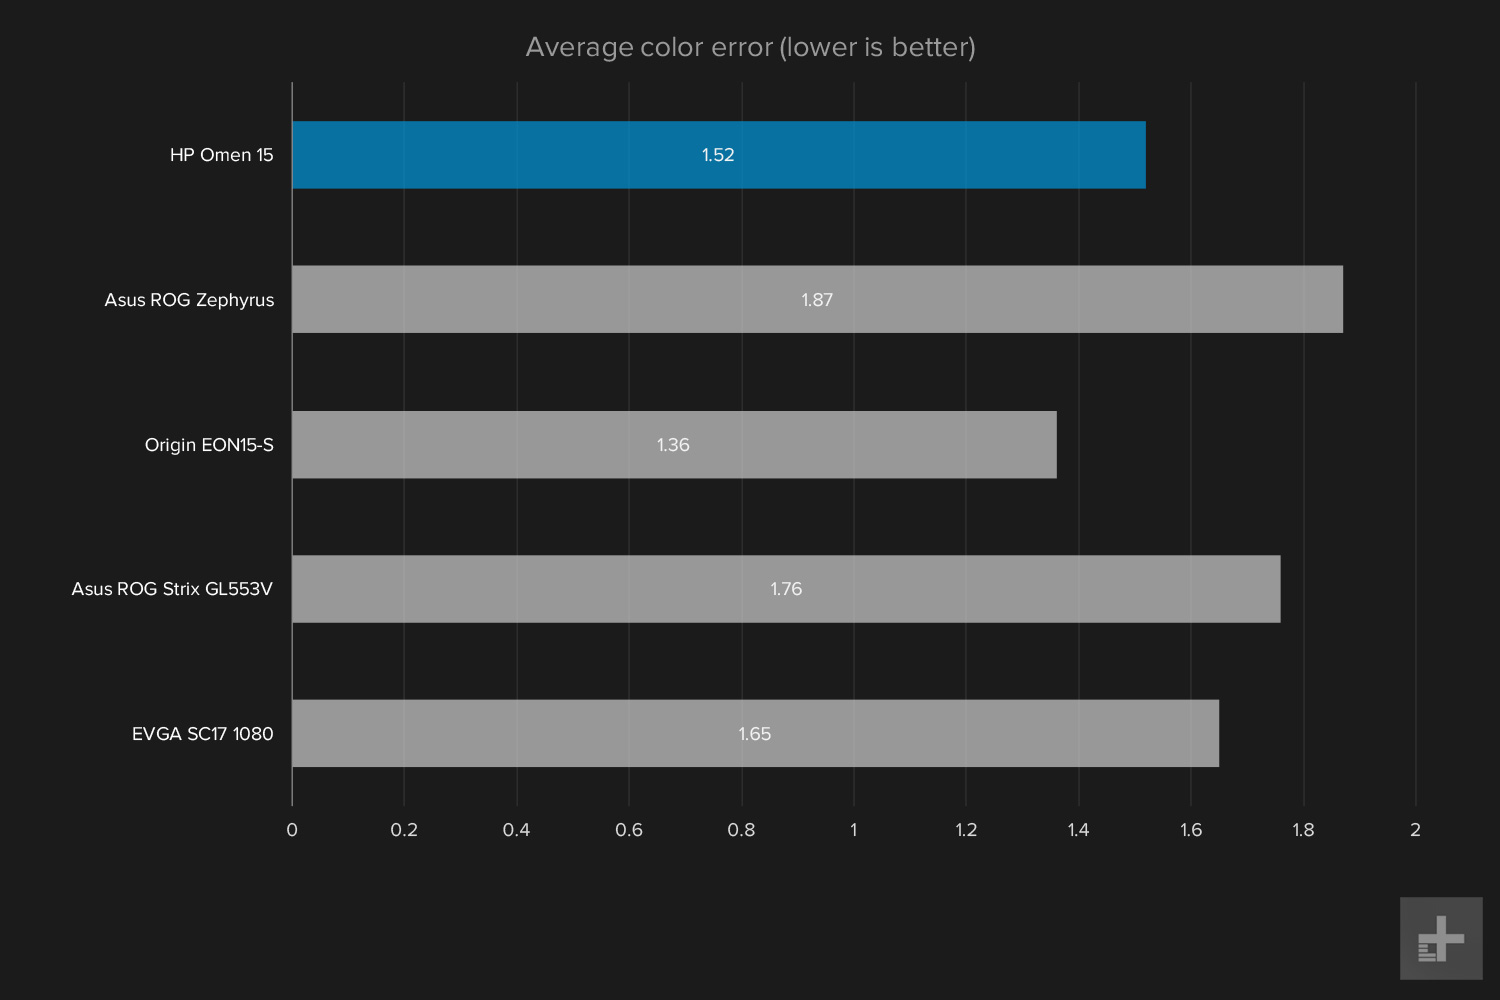 HP Omen benchmark graphs Average Color Error